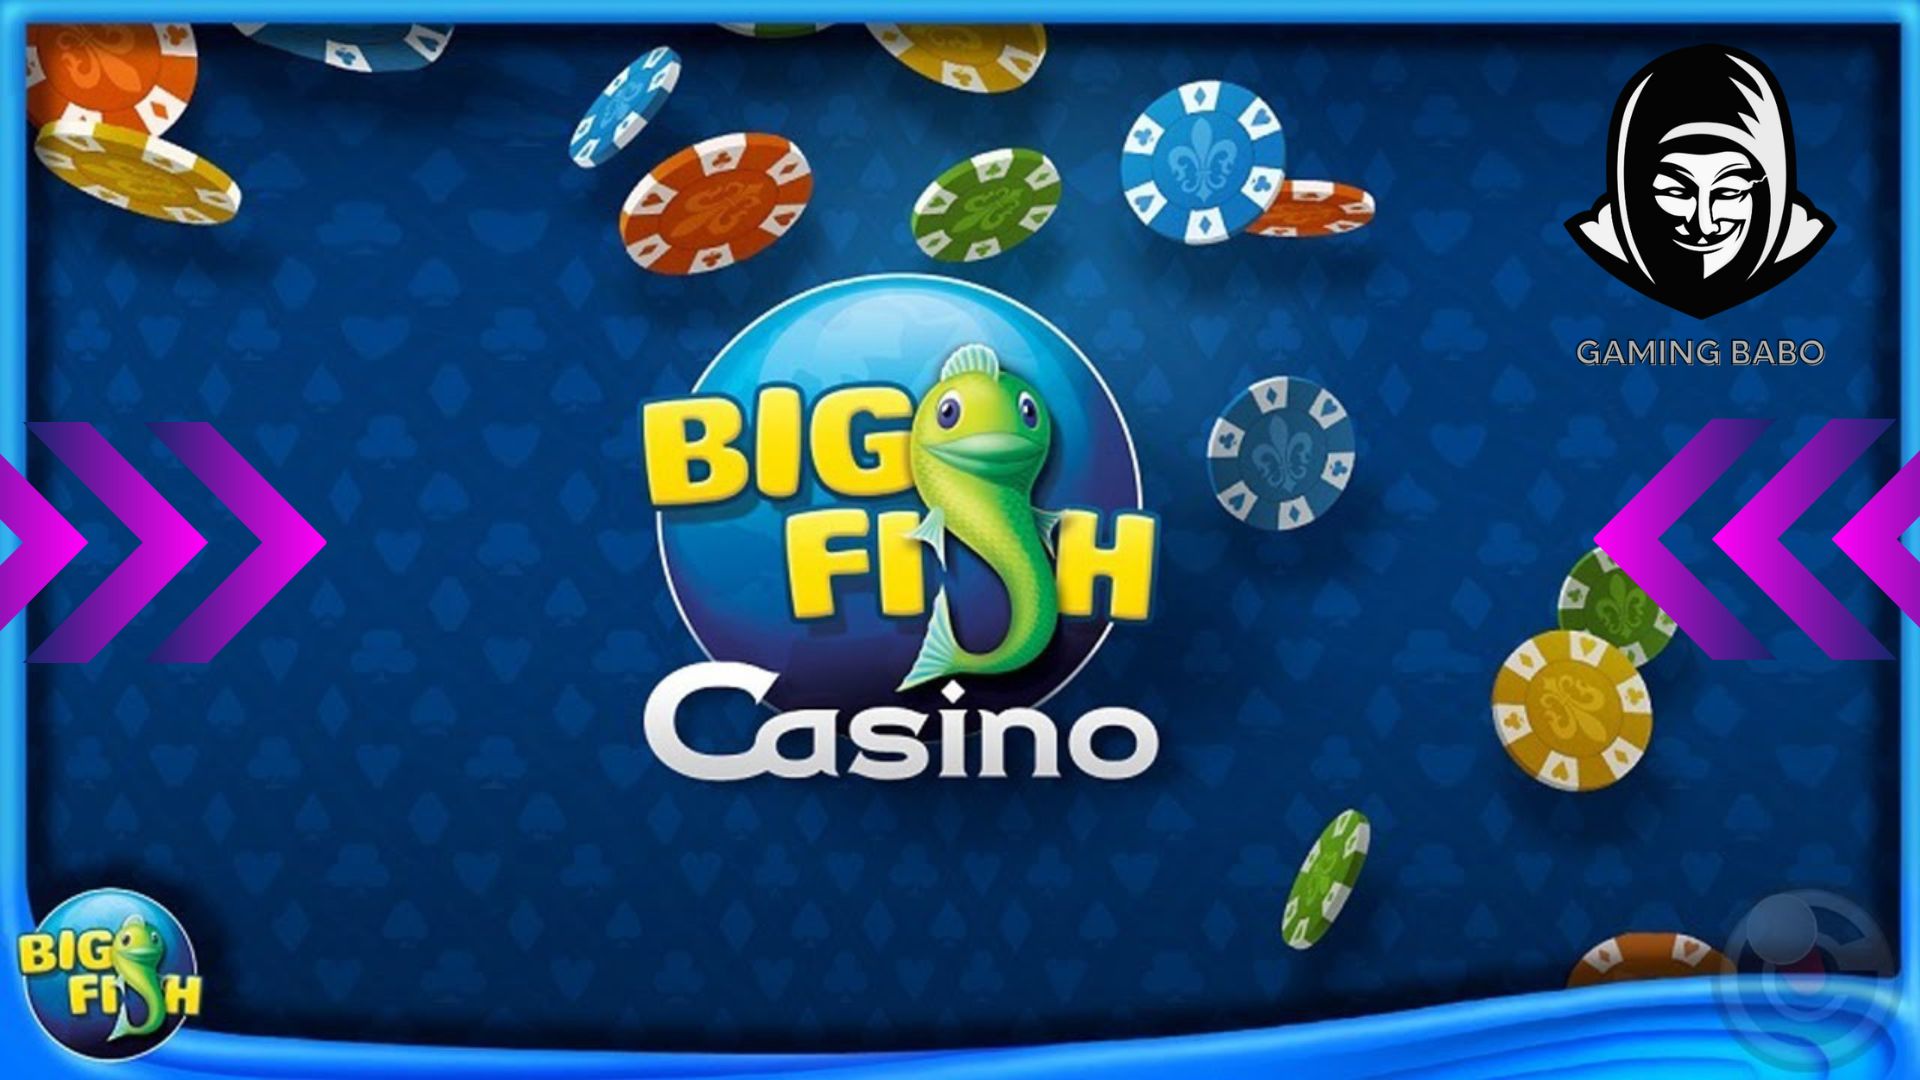 Big Fish Casino tips and tricks